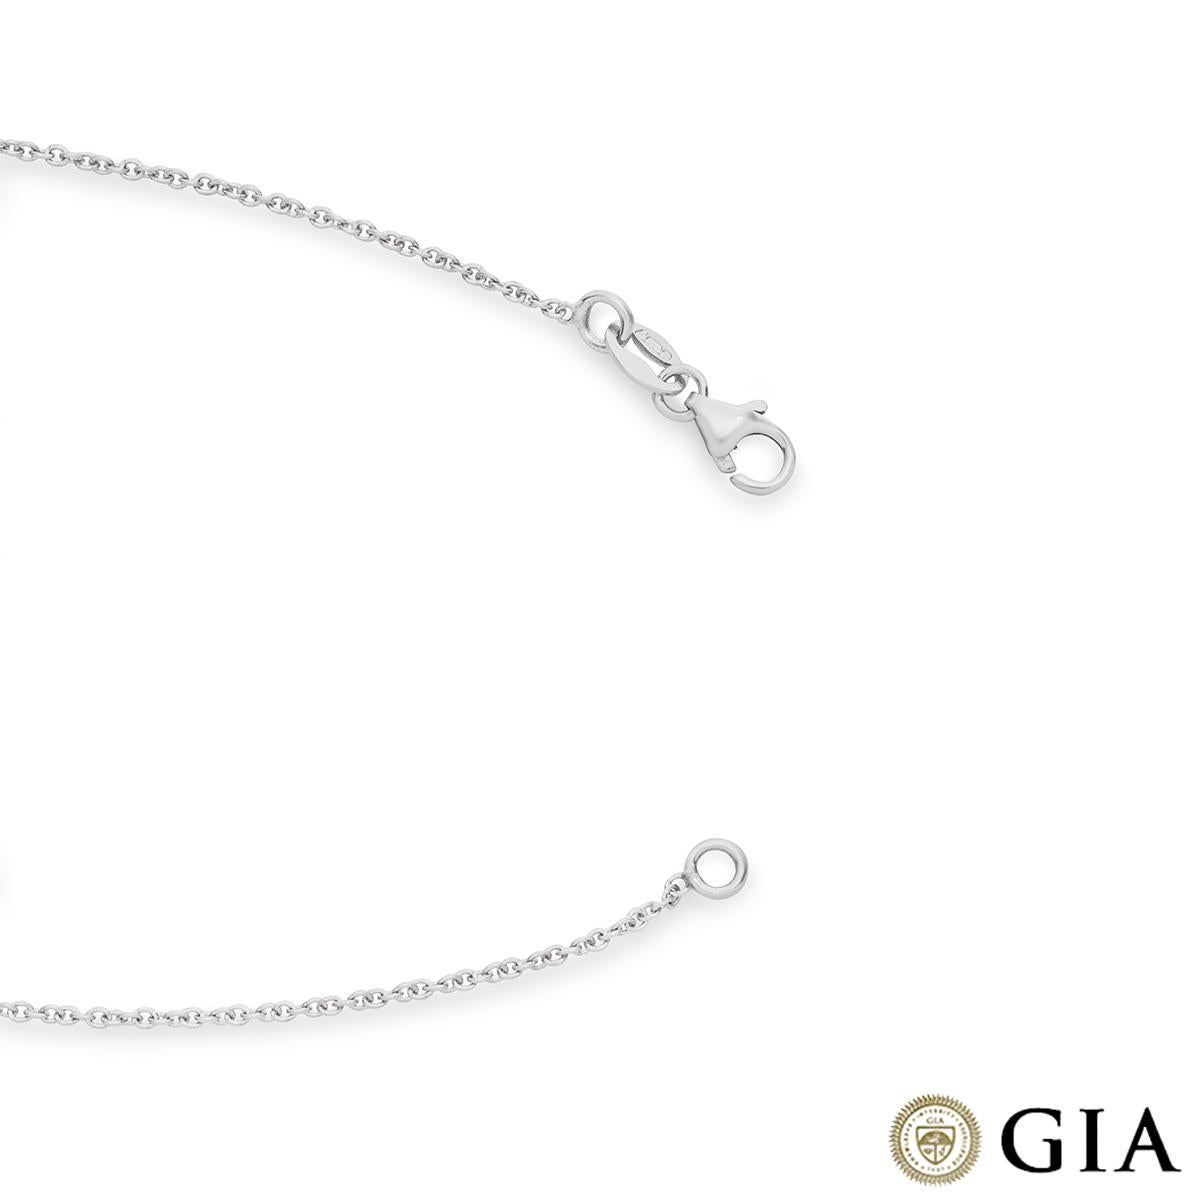 Women's GIA Certified White Gold Emerald Cut Diamond Pendant 0.92 Carat G/SI1 For Sale